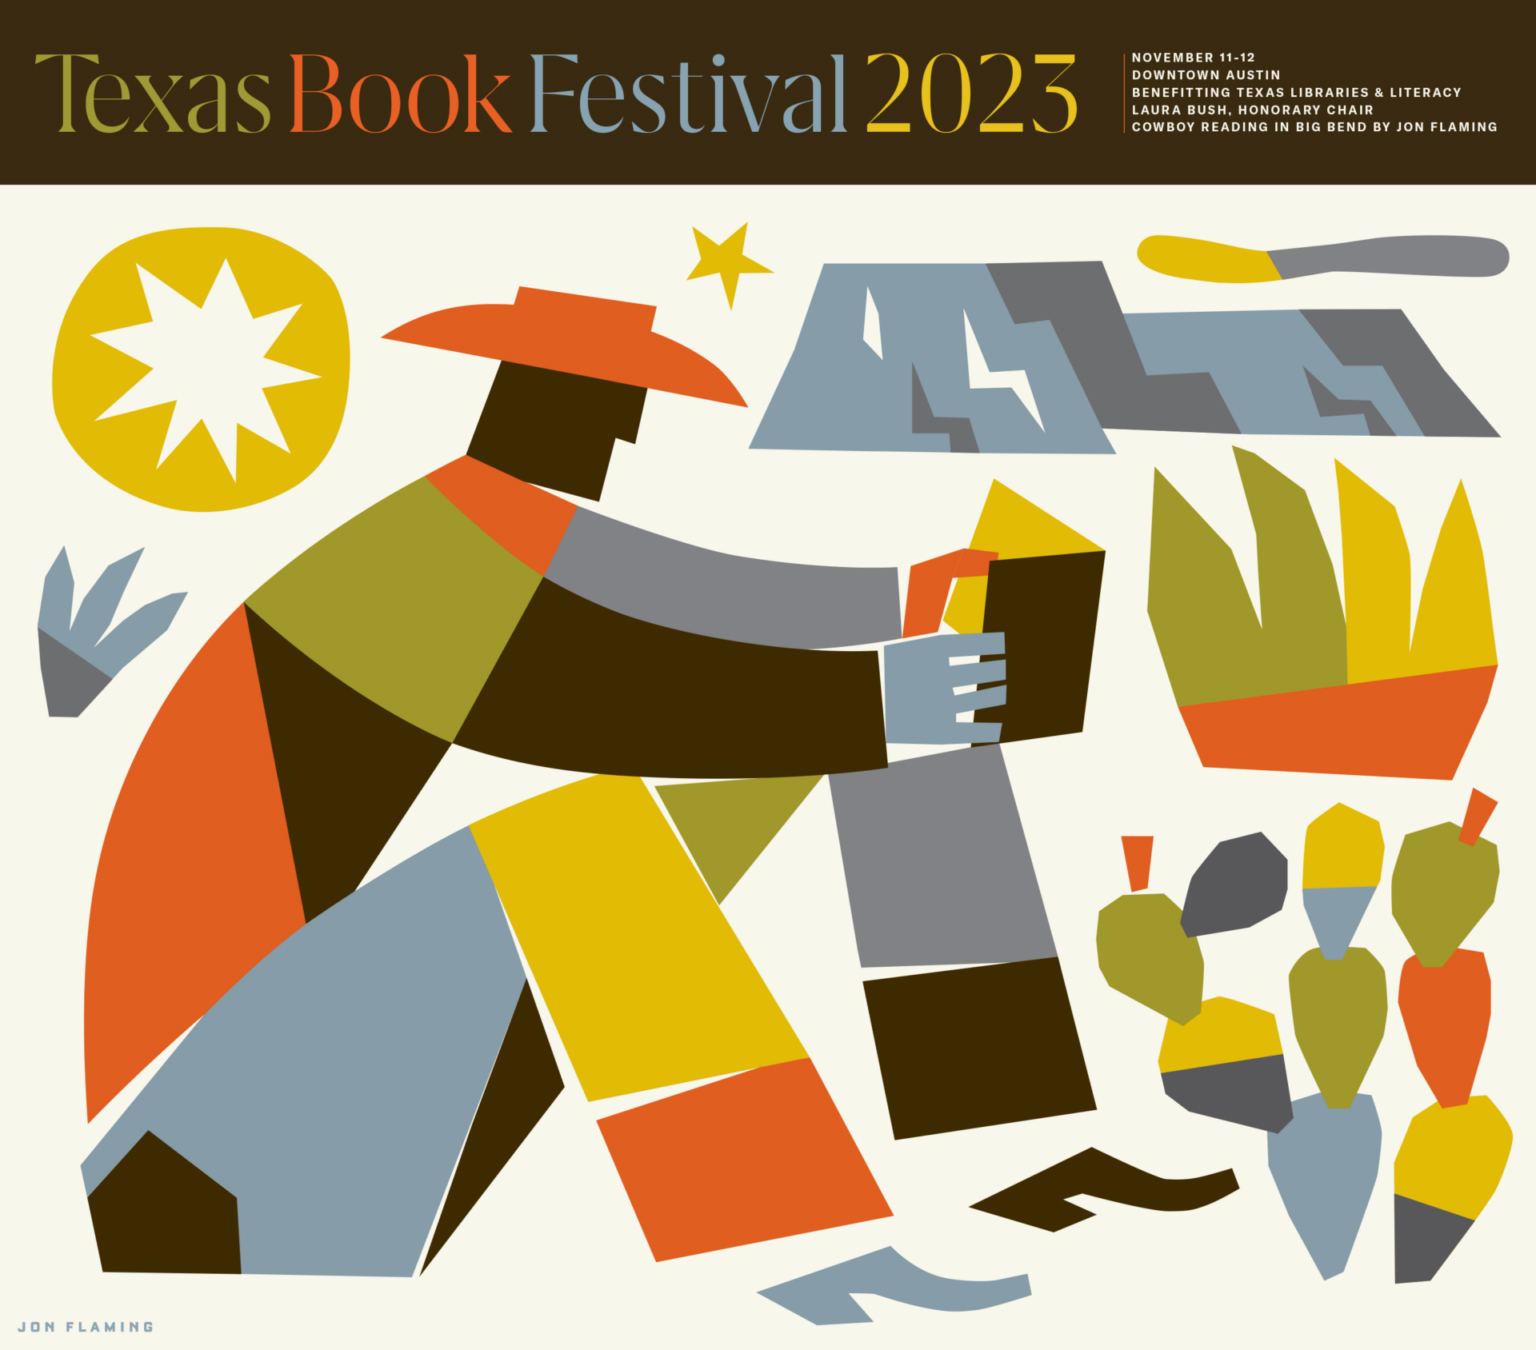 Texas Book Festival Announces Jon Flaming as its 2023 Festival Poster